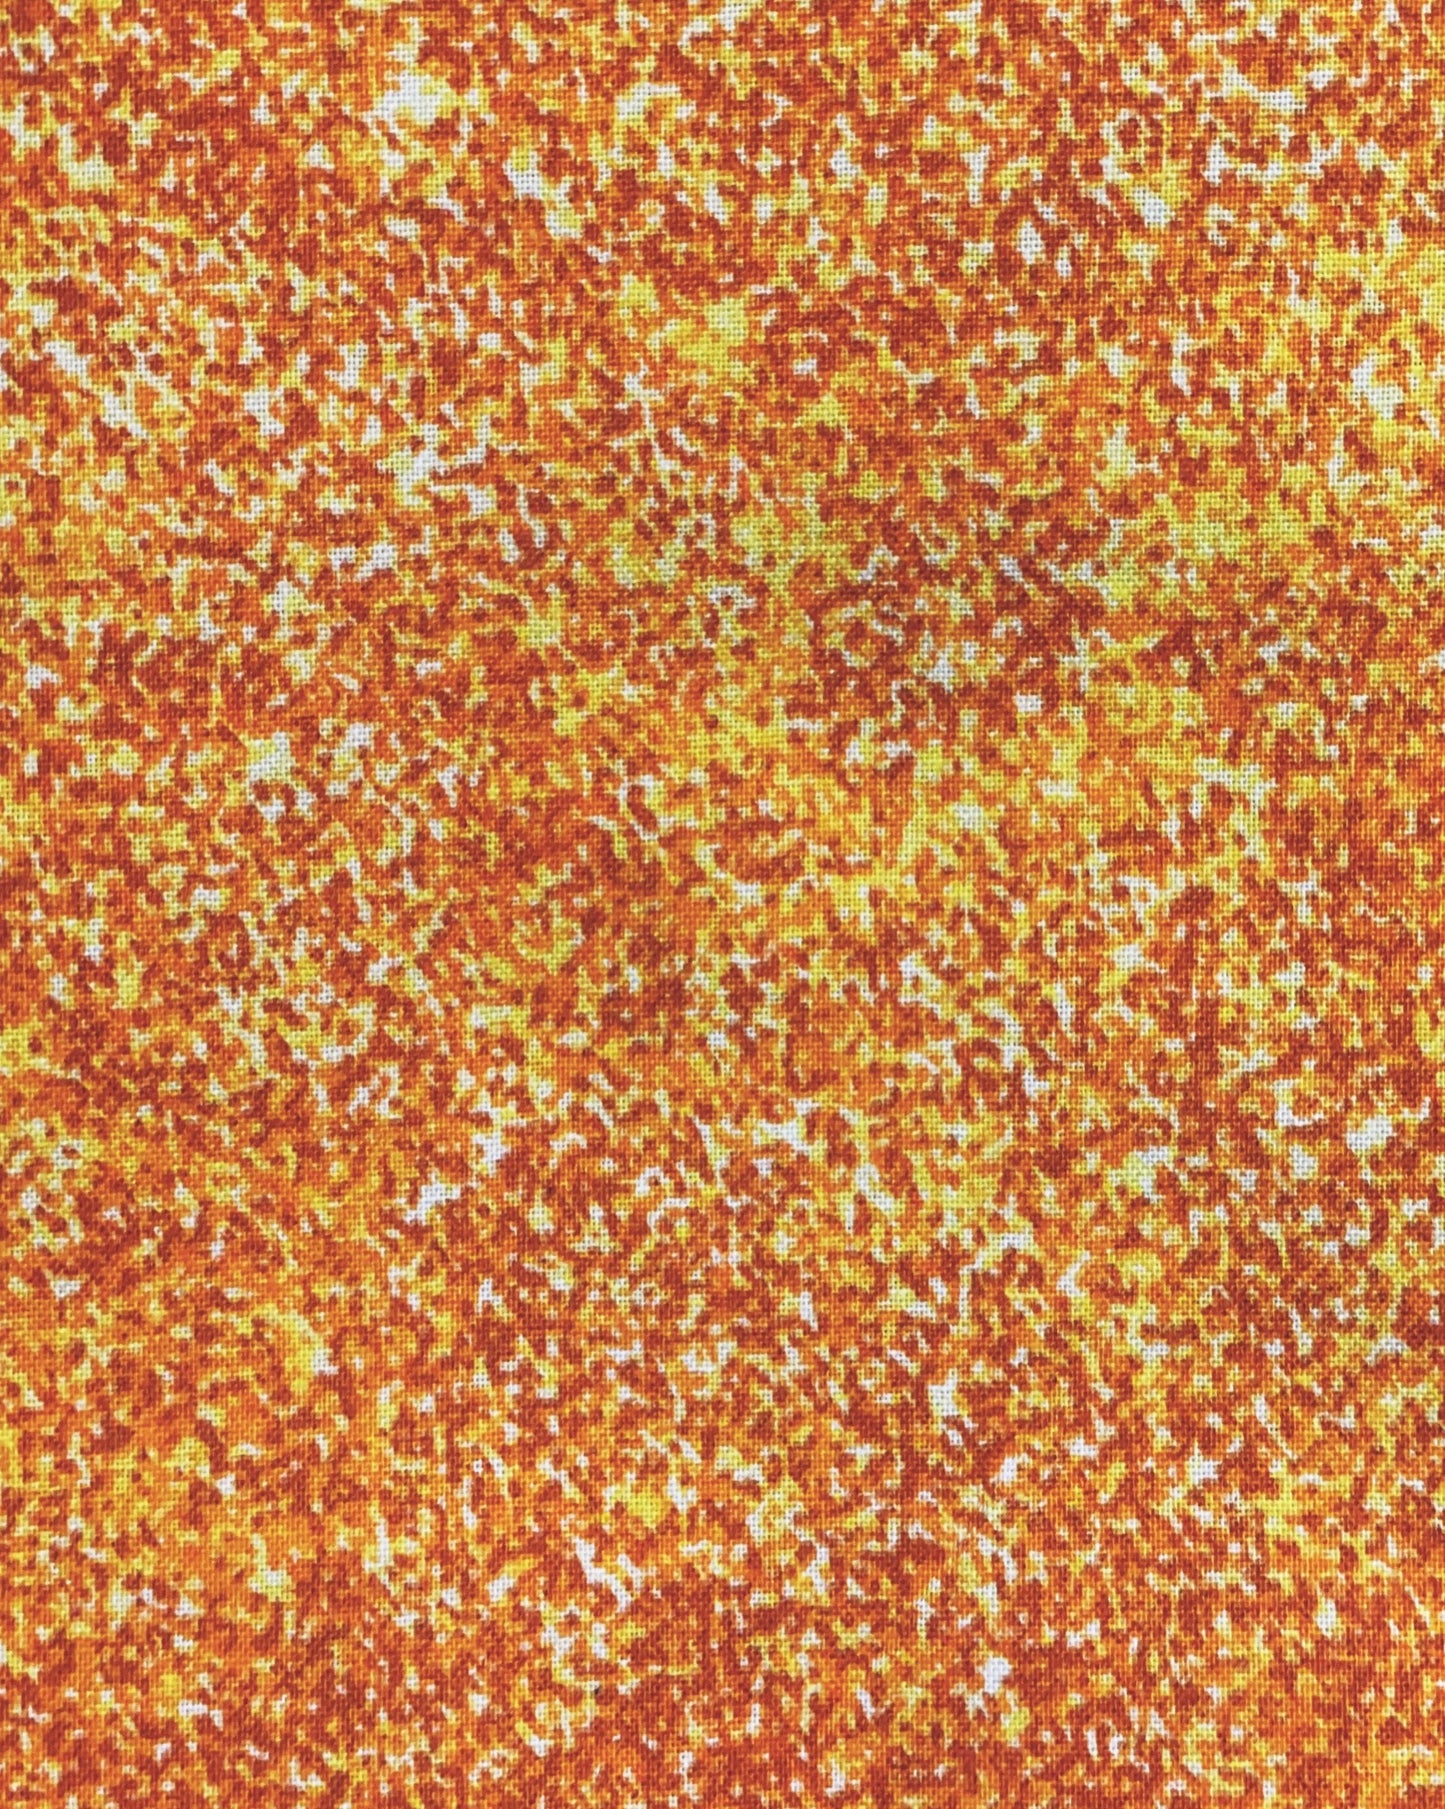 Orange sprinkles (F-4)